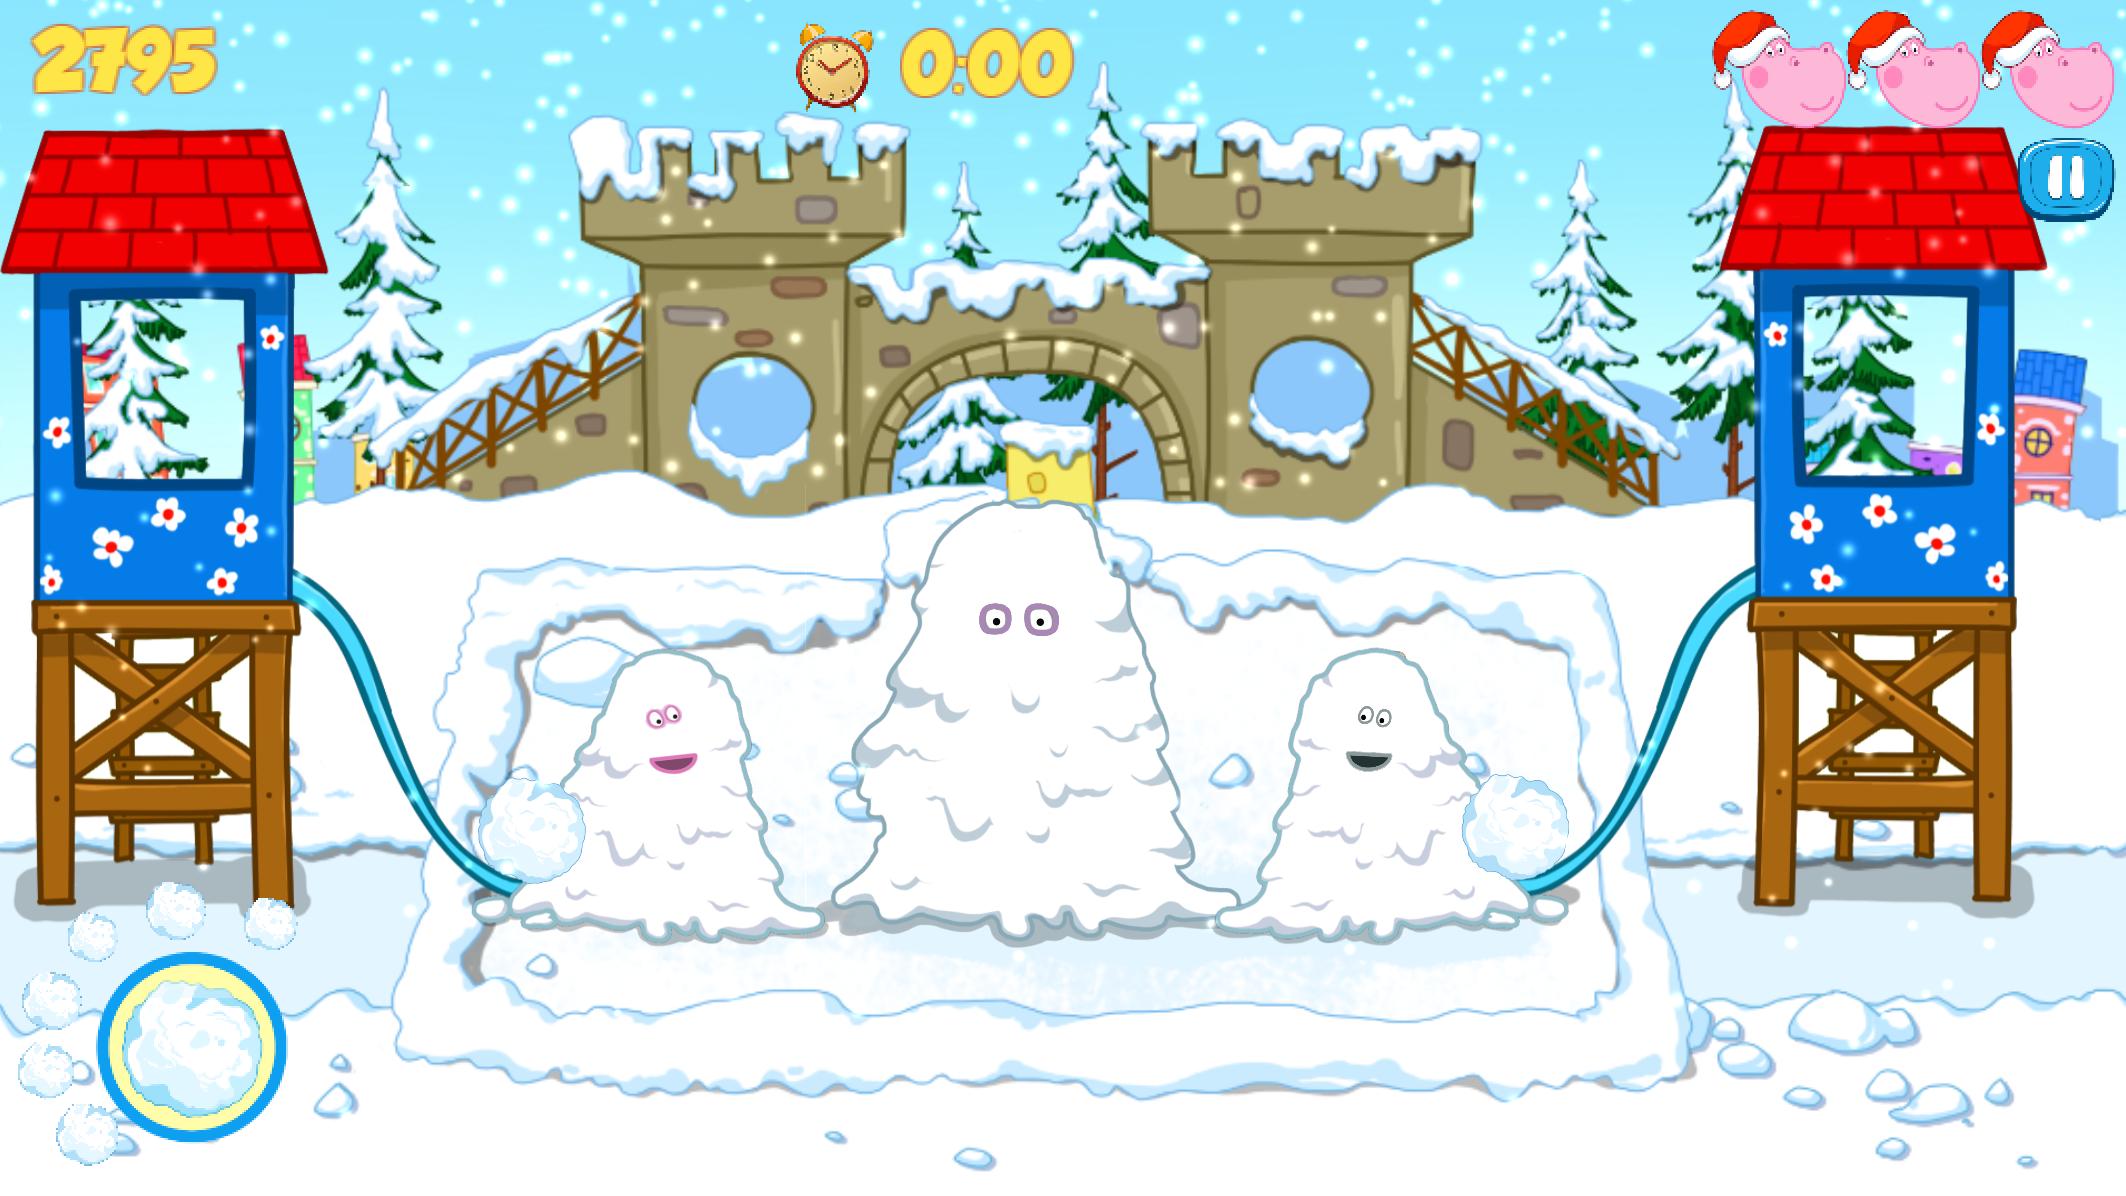 Игра зима том игра. Зима в играх. Snowball игра. Снежки игра на ПК. Интерактивная игра зима.